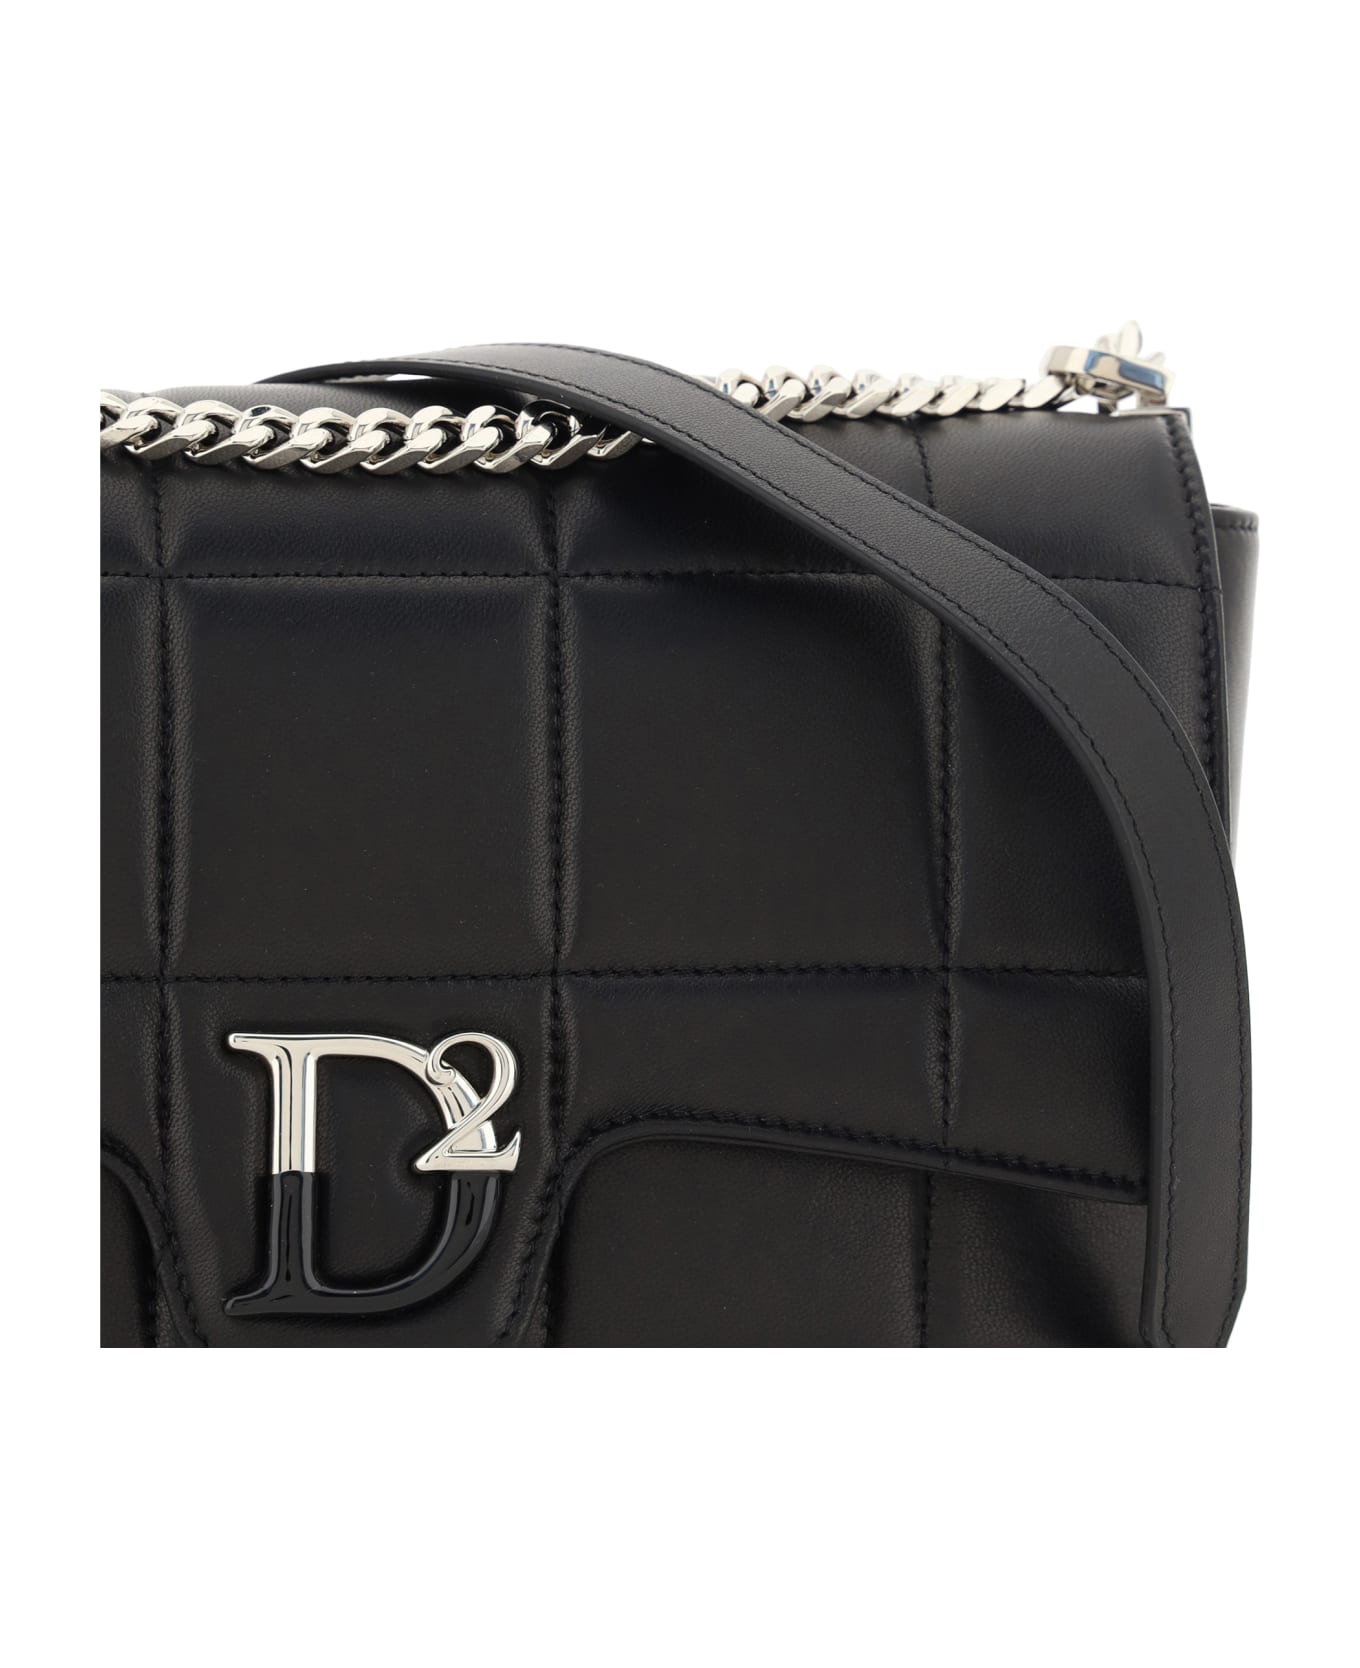 Dsquared2 D2 Black Leather Bag - M802